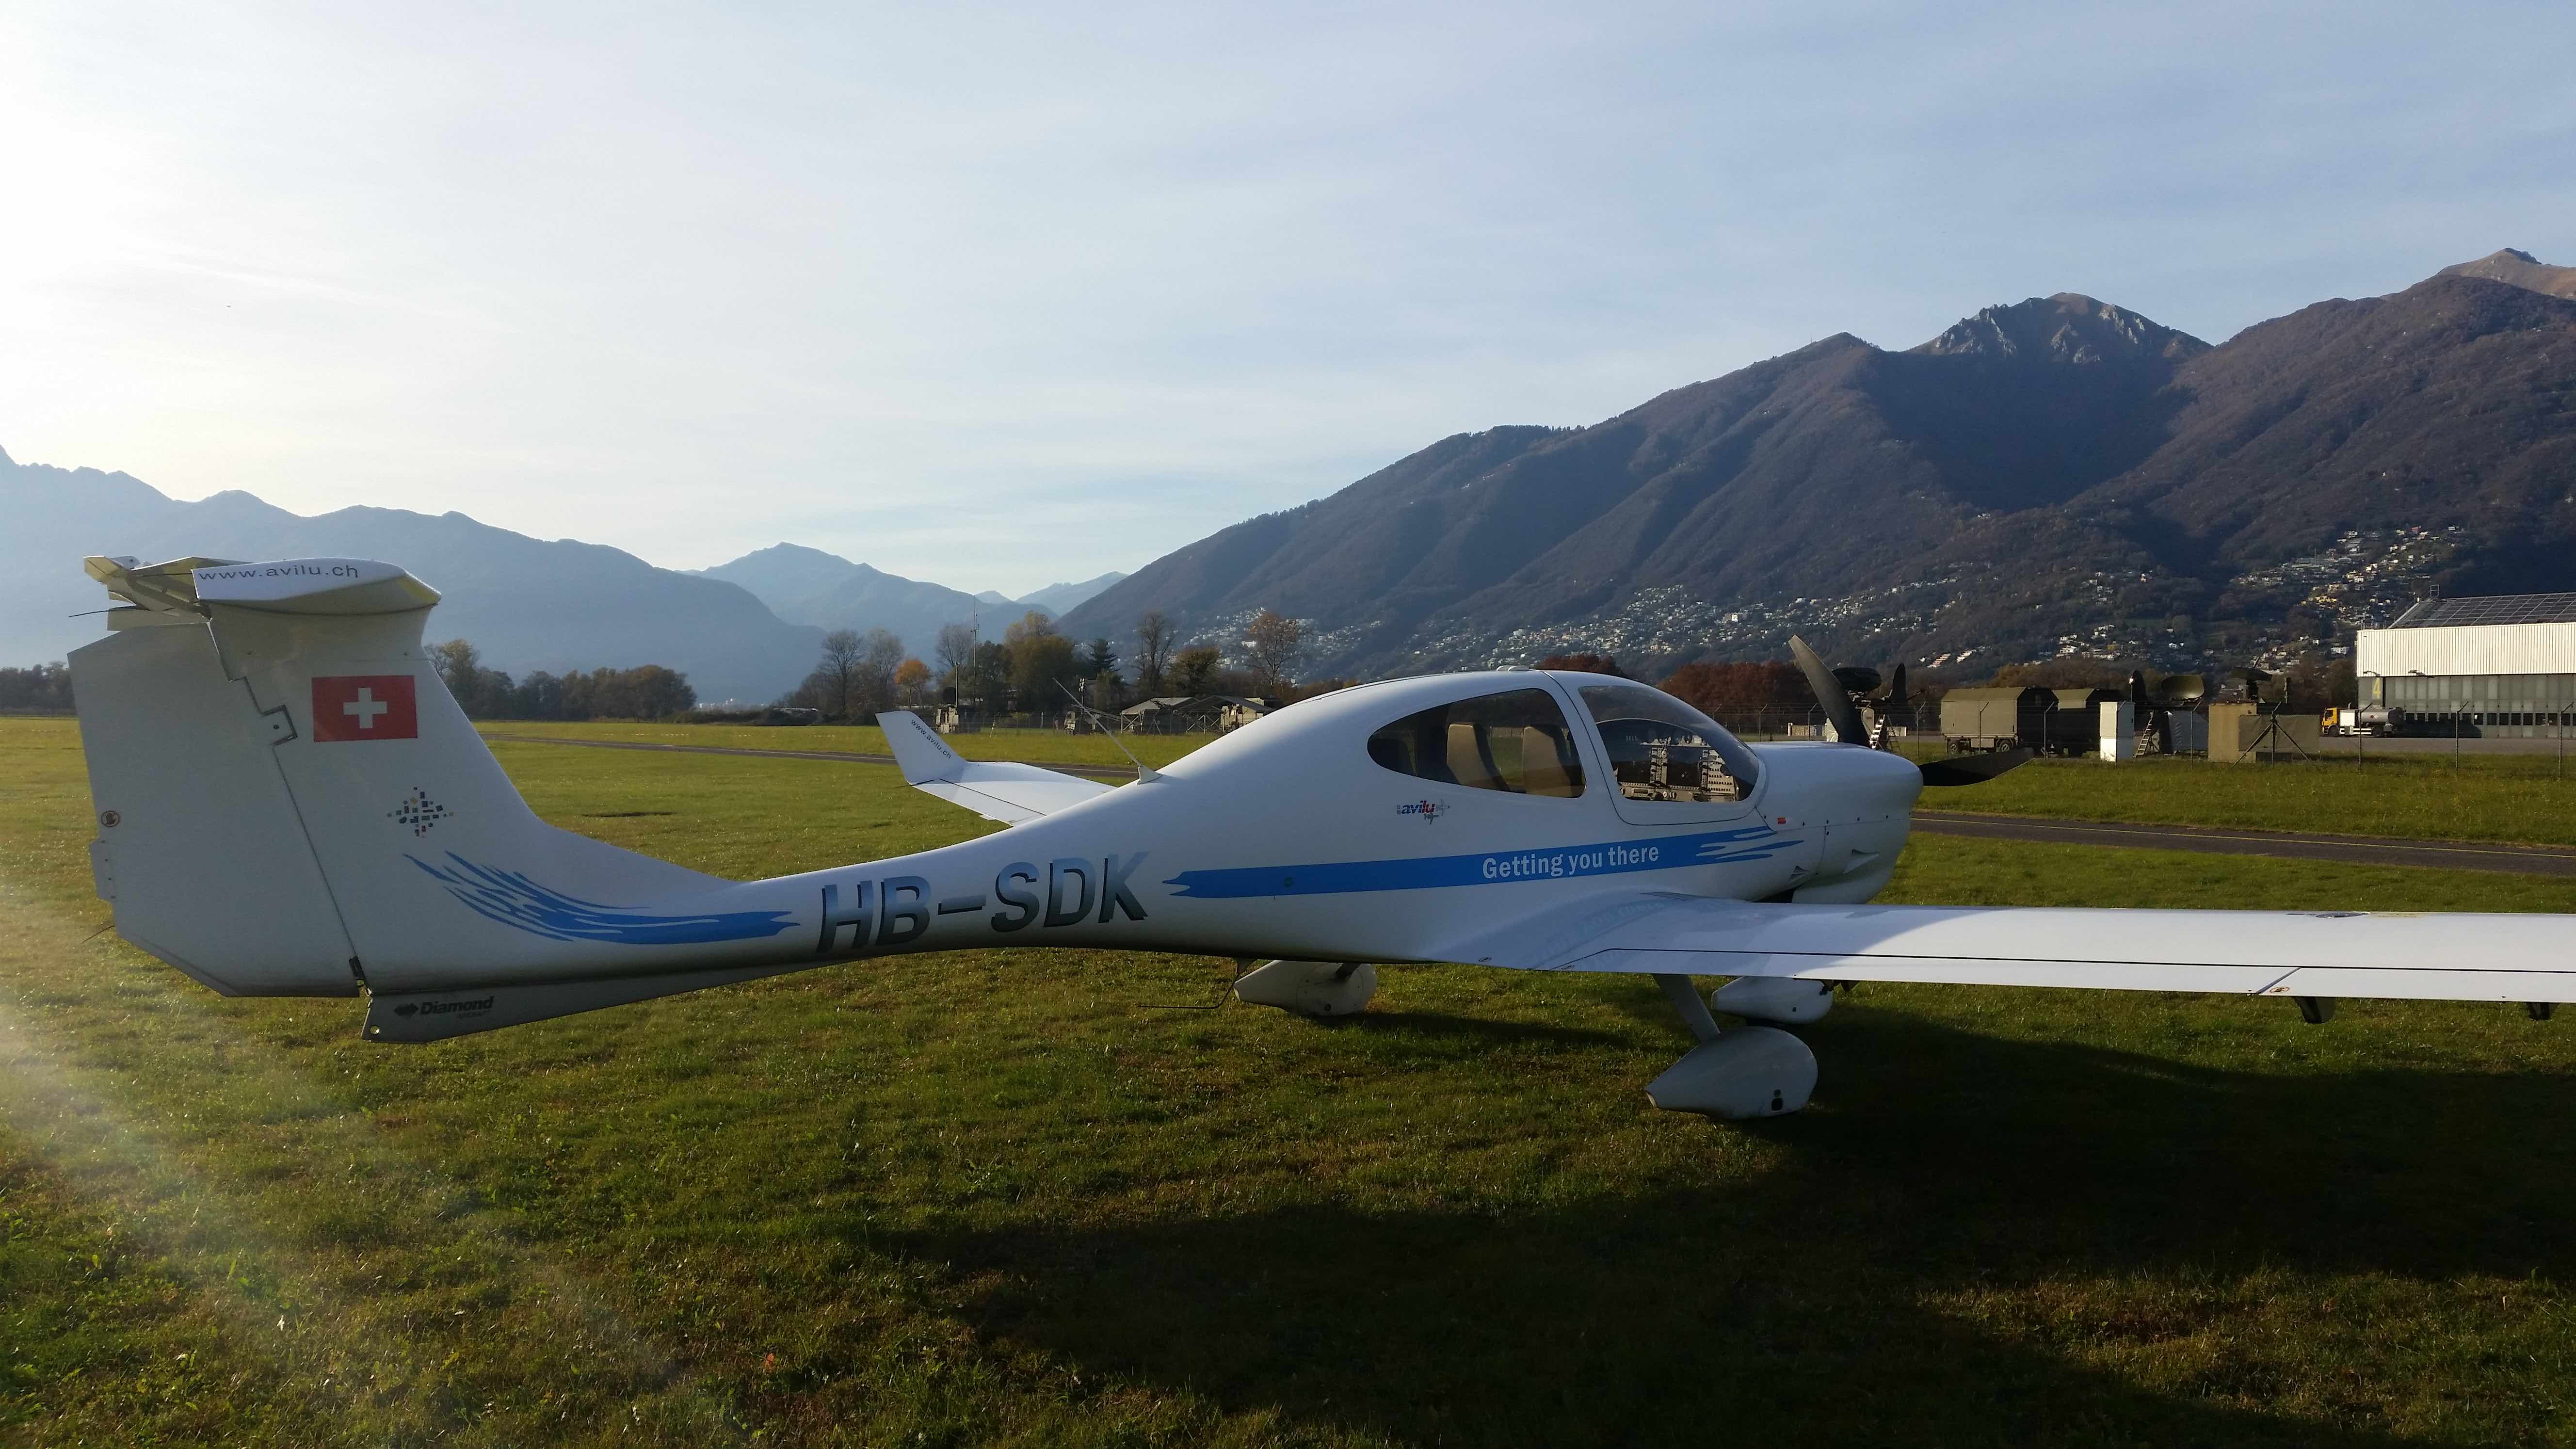 HB-SDK plane parked in Locarno